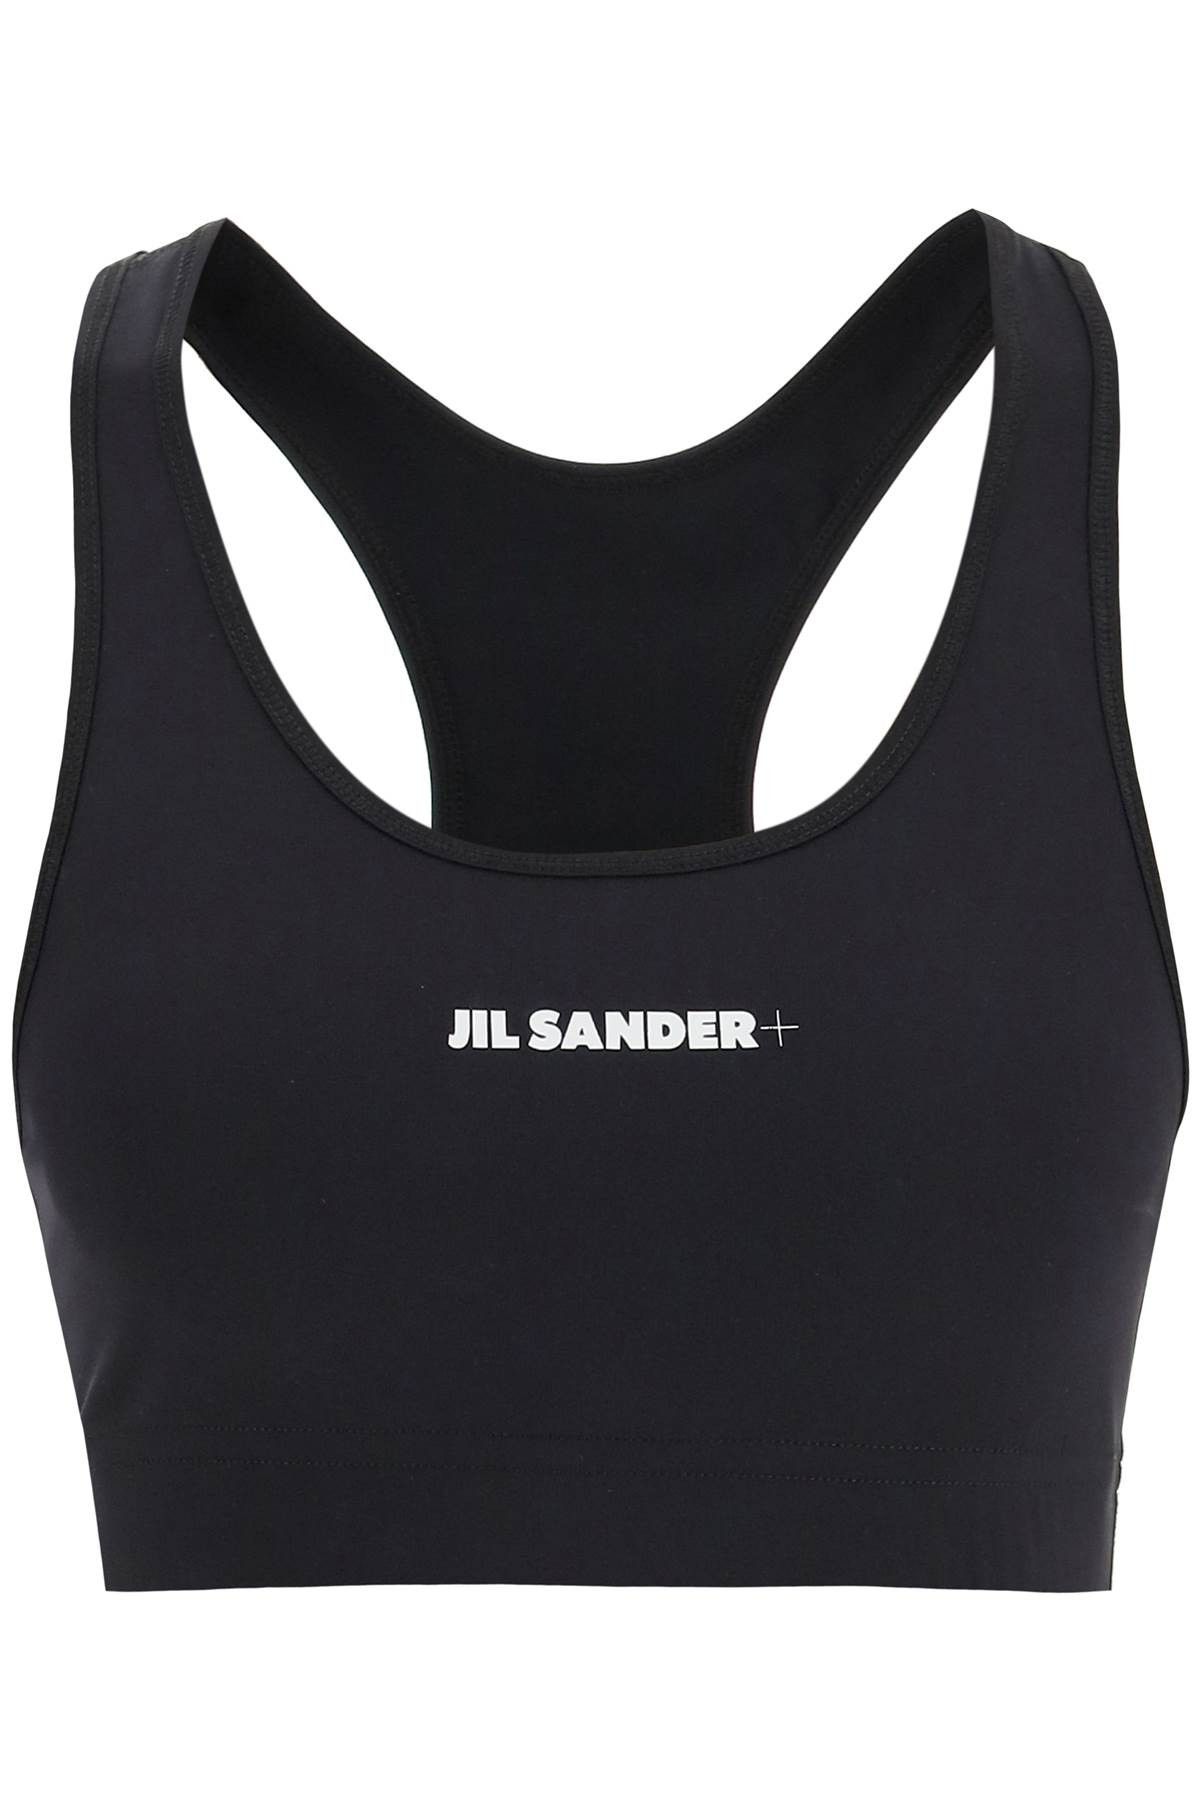 Jil Sander Jil sander logo sports bra | Grailed